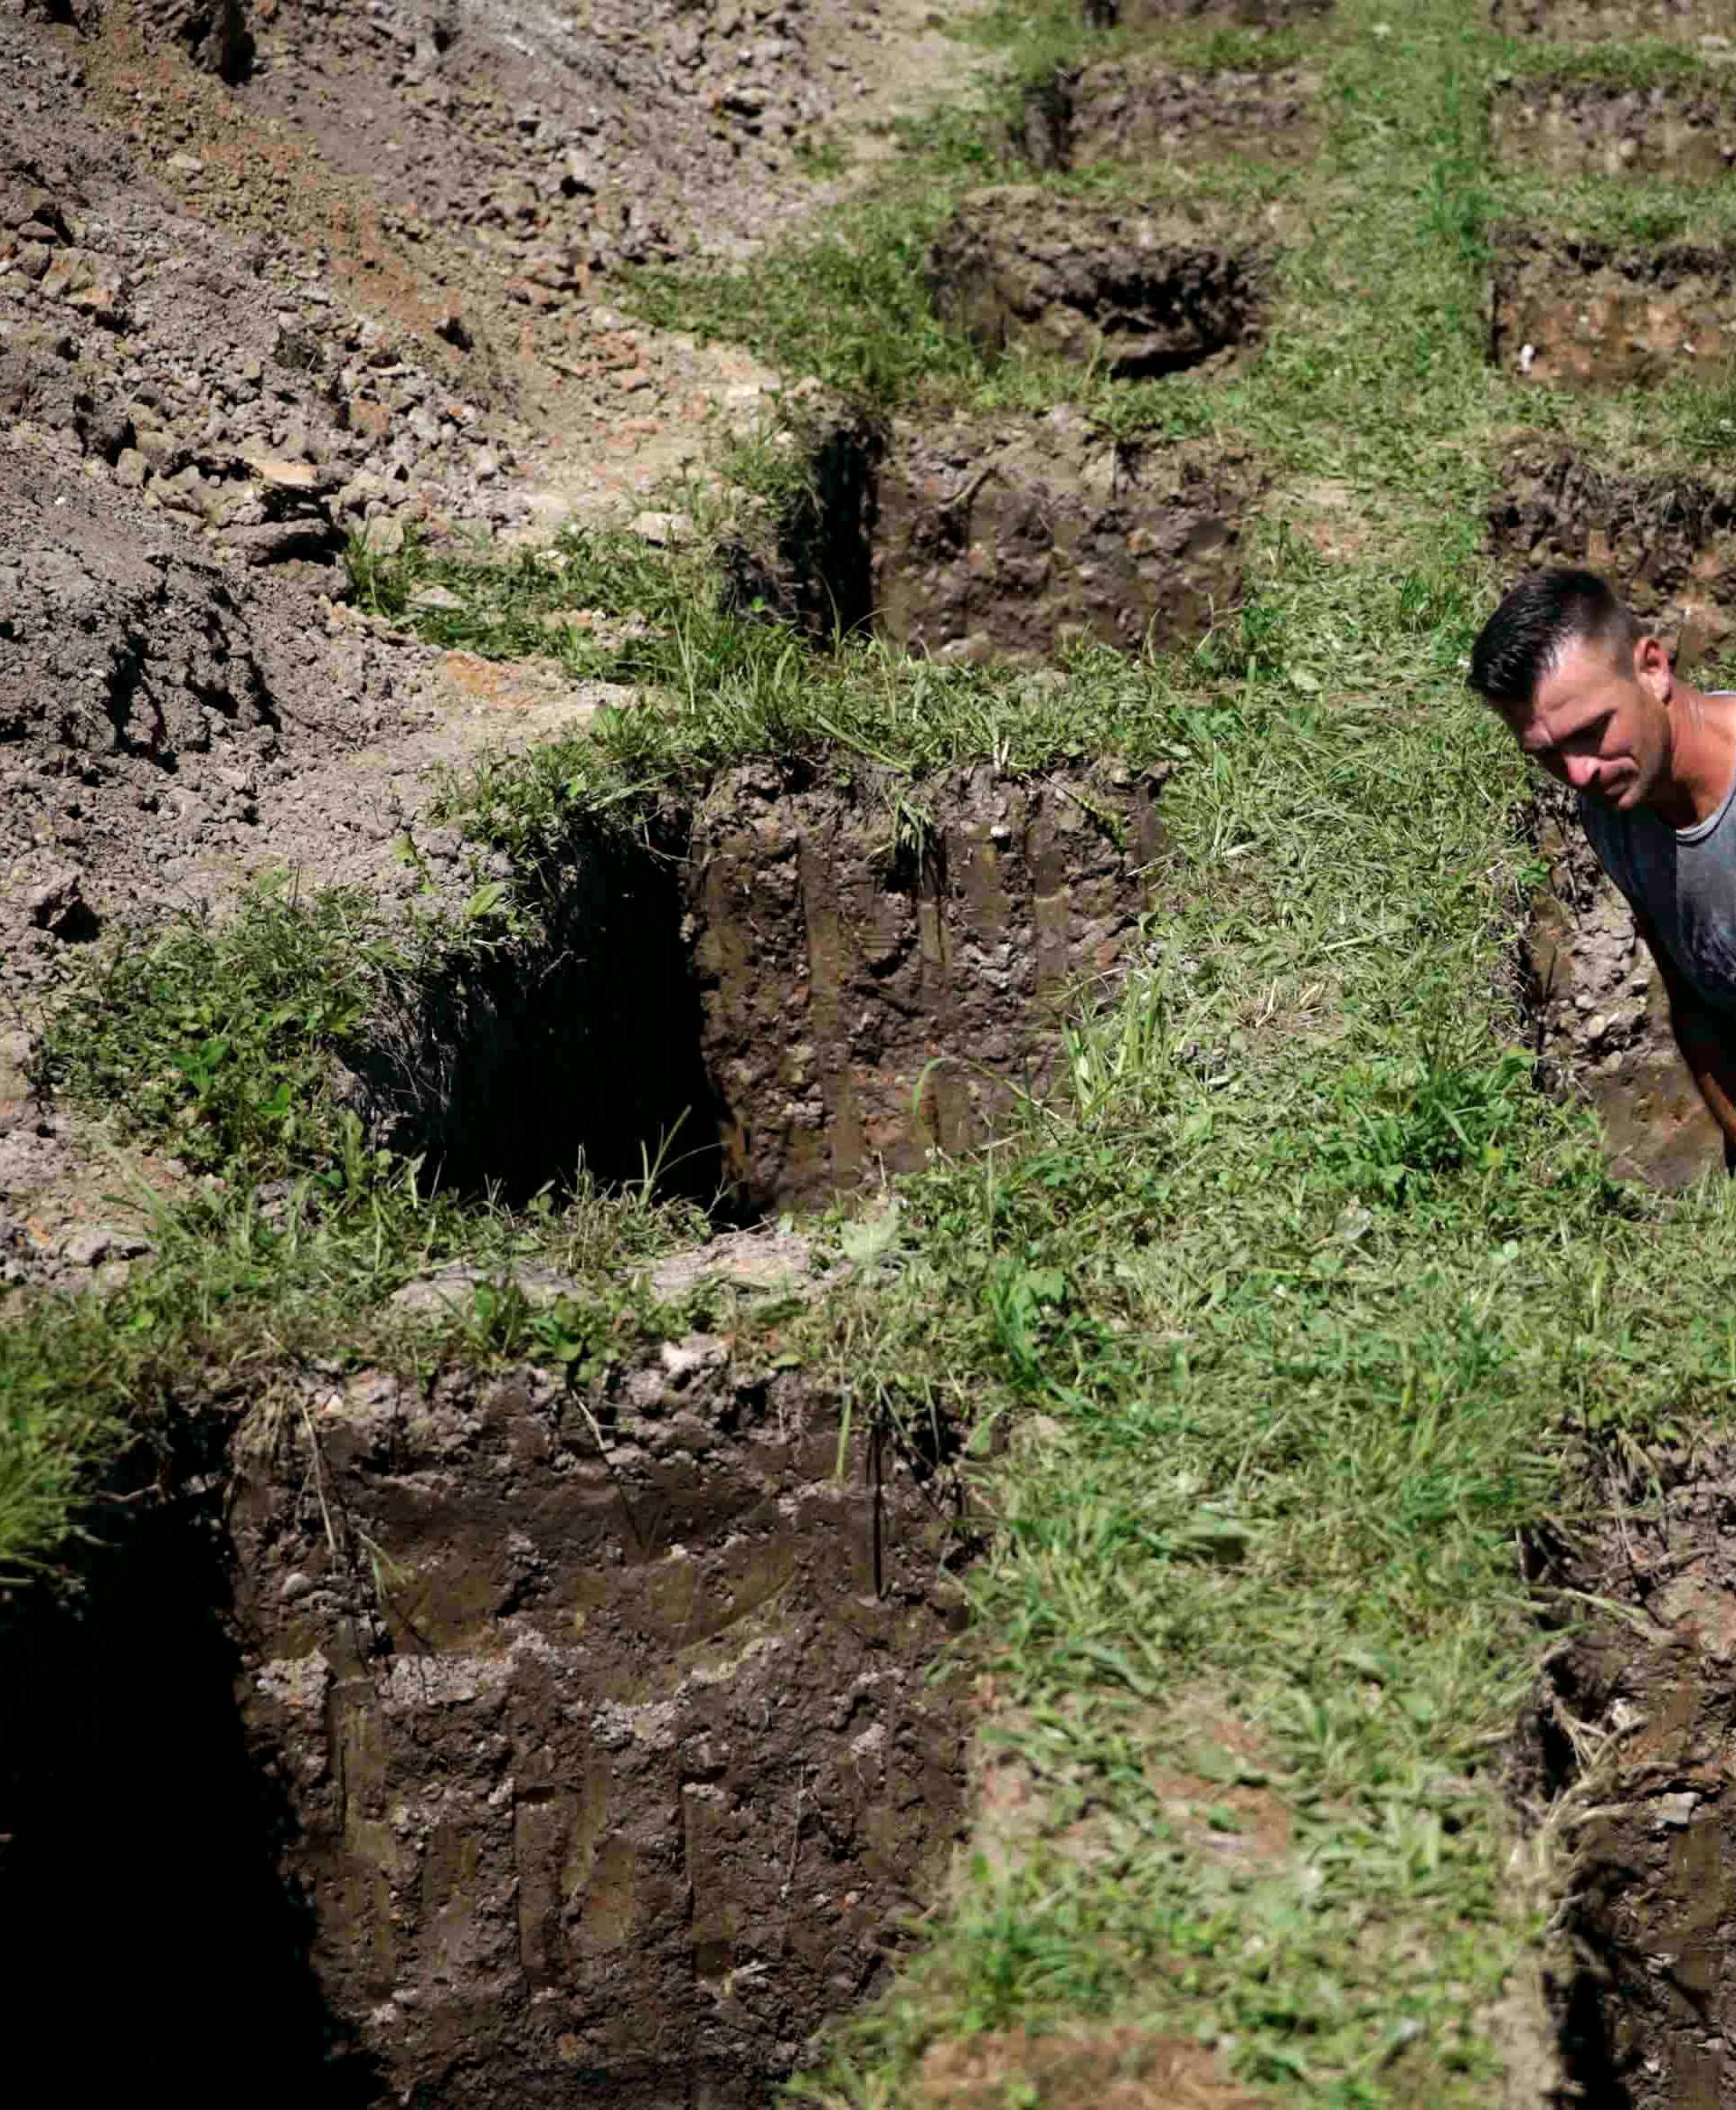 A worker digs graves at a memorial centre for Srebrenica Massacre victims in Potocari